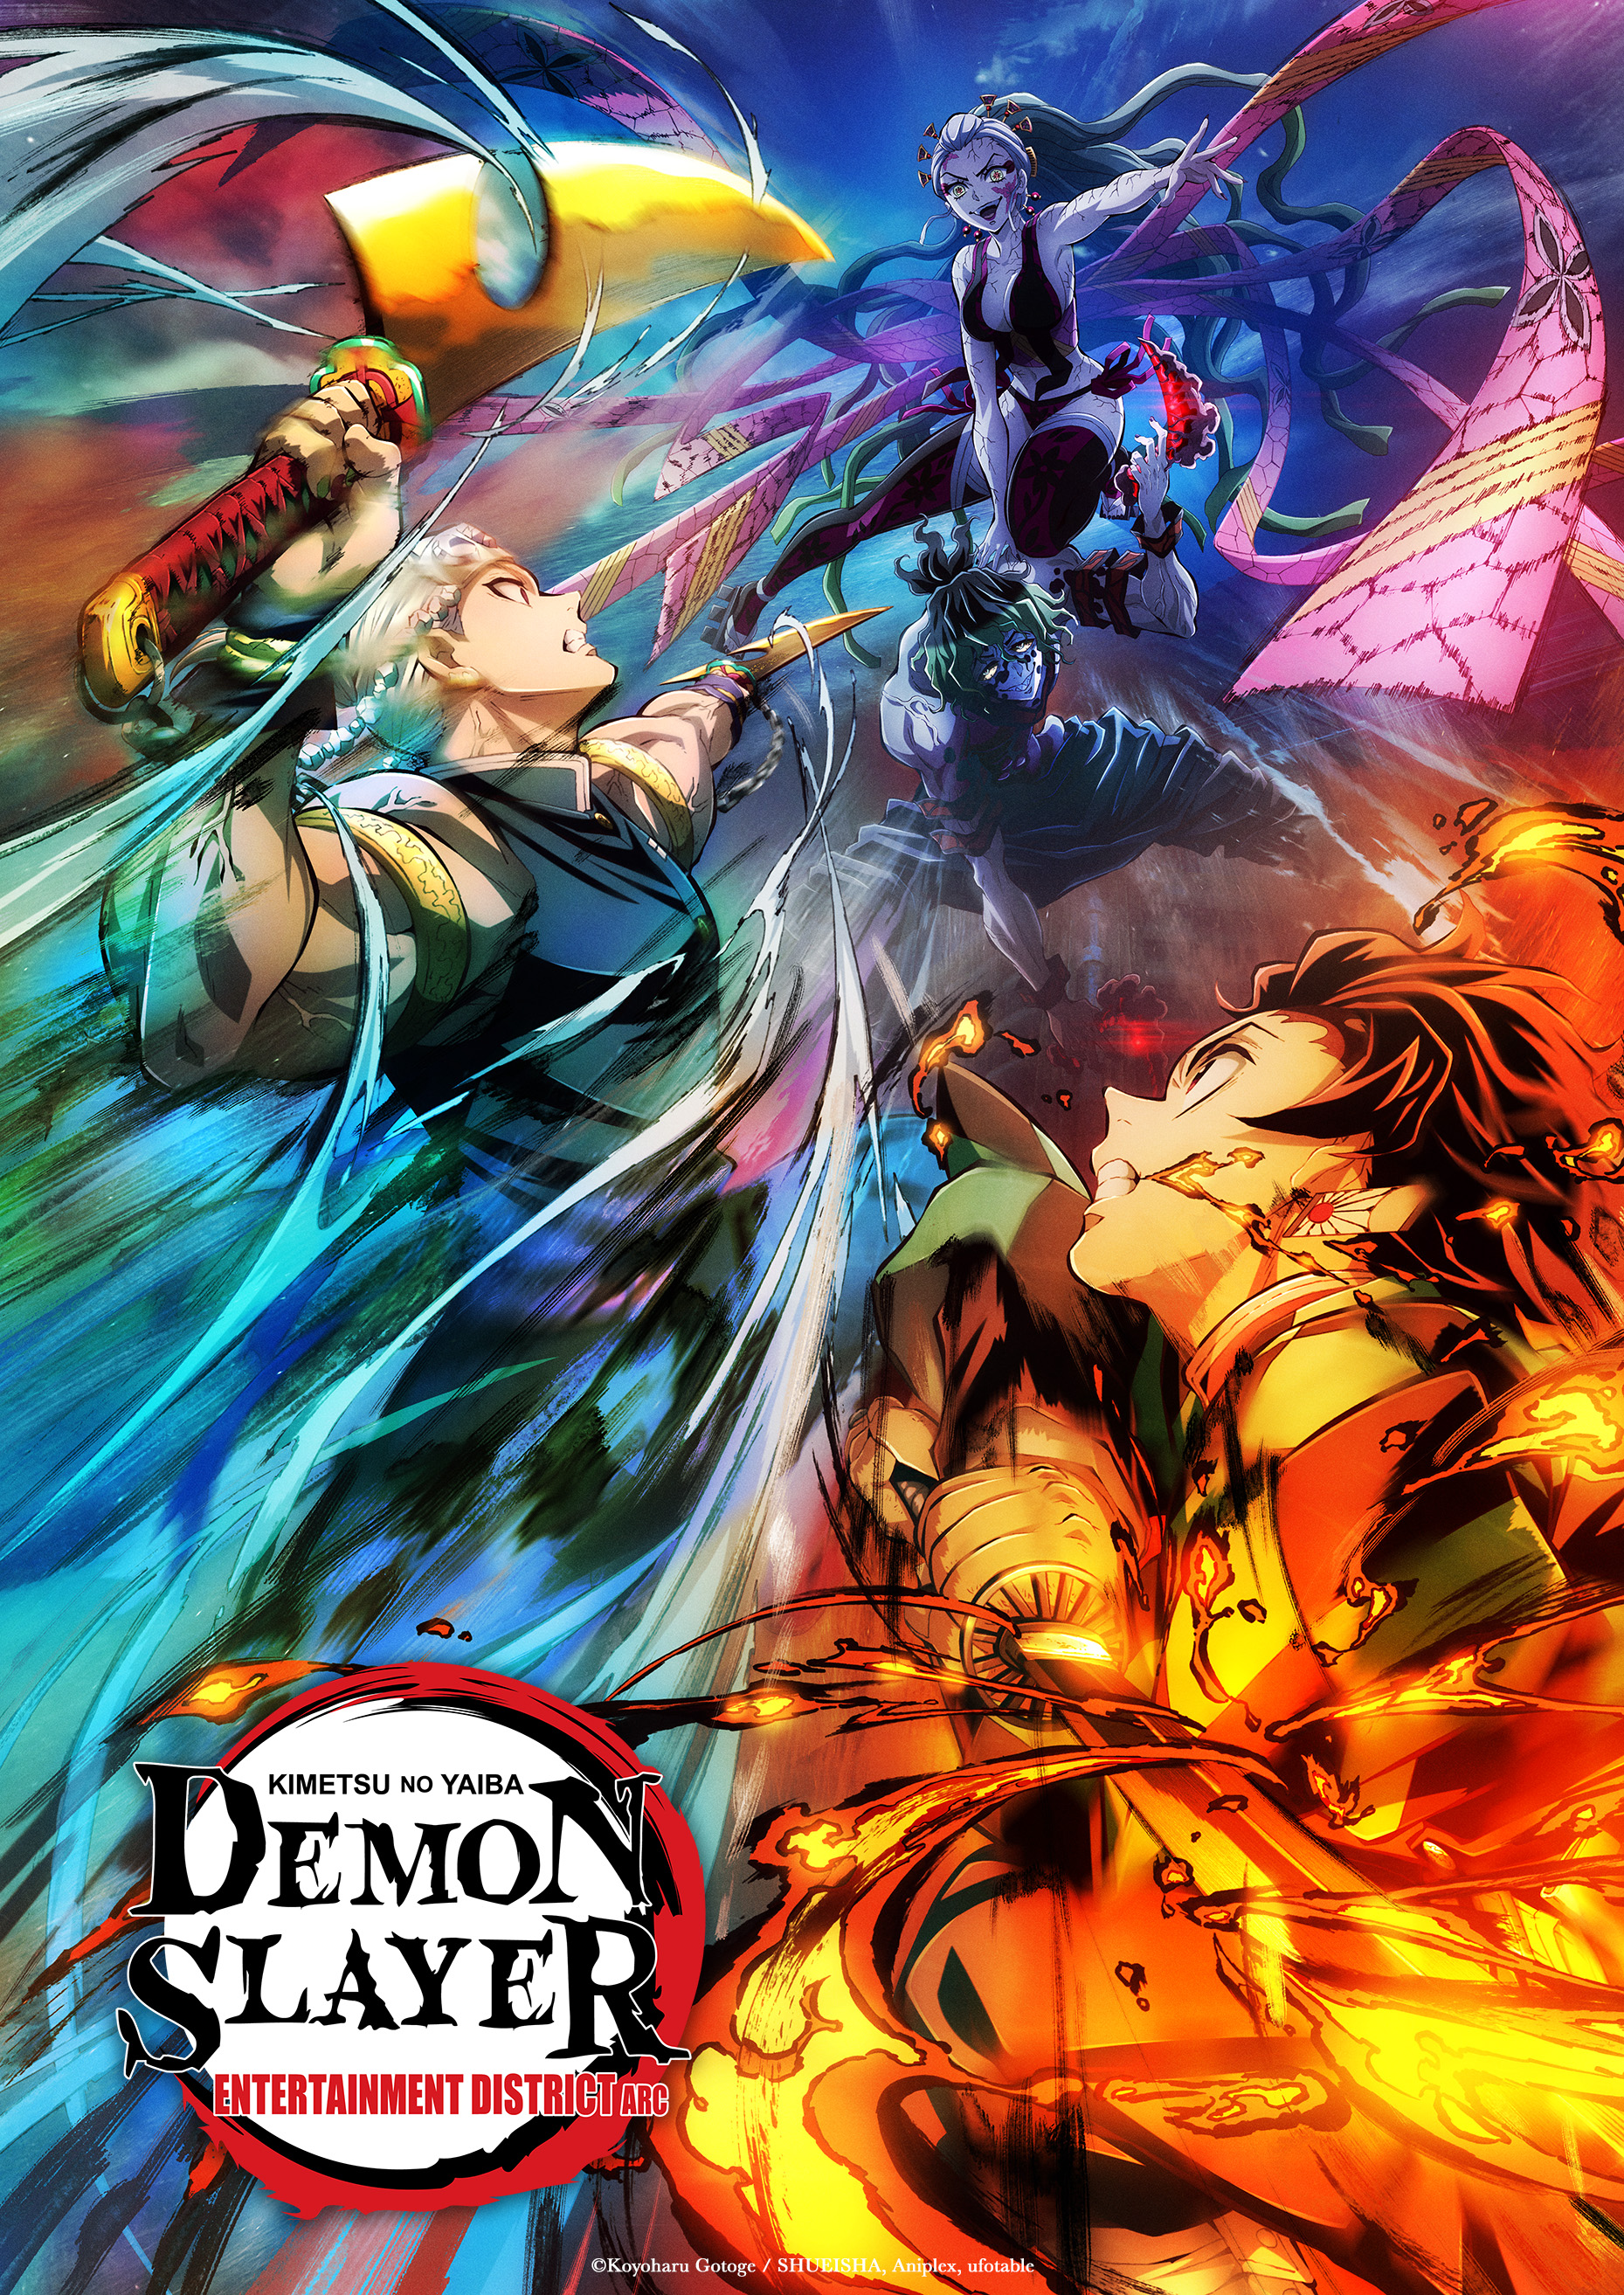 ufotable on Demon Slayer Kimetsu no Yaiba Entertainment